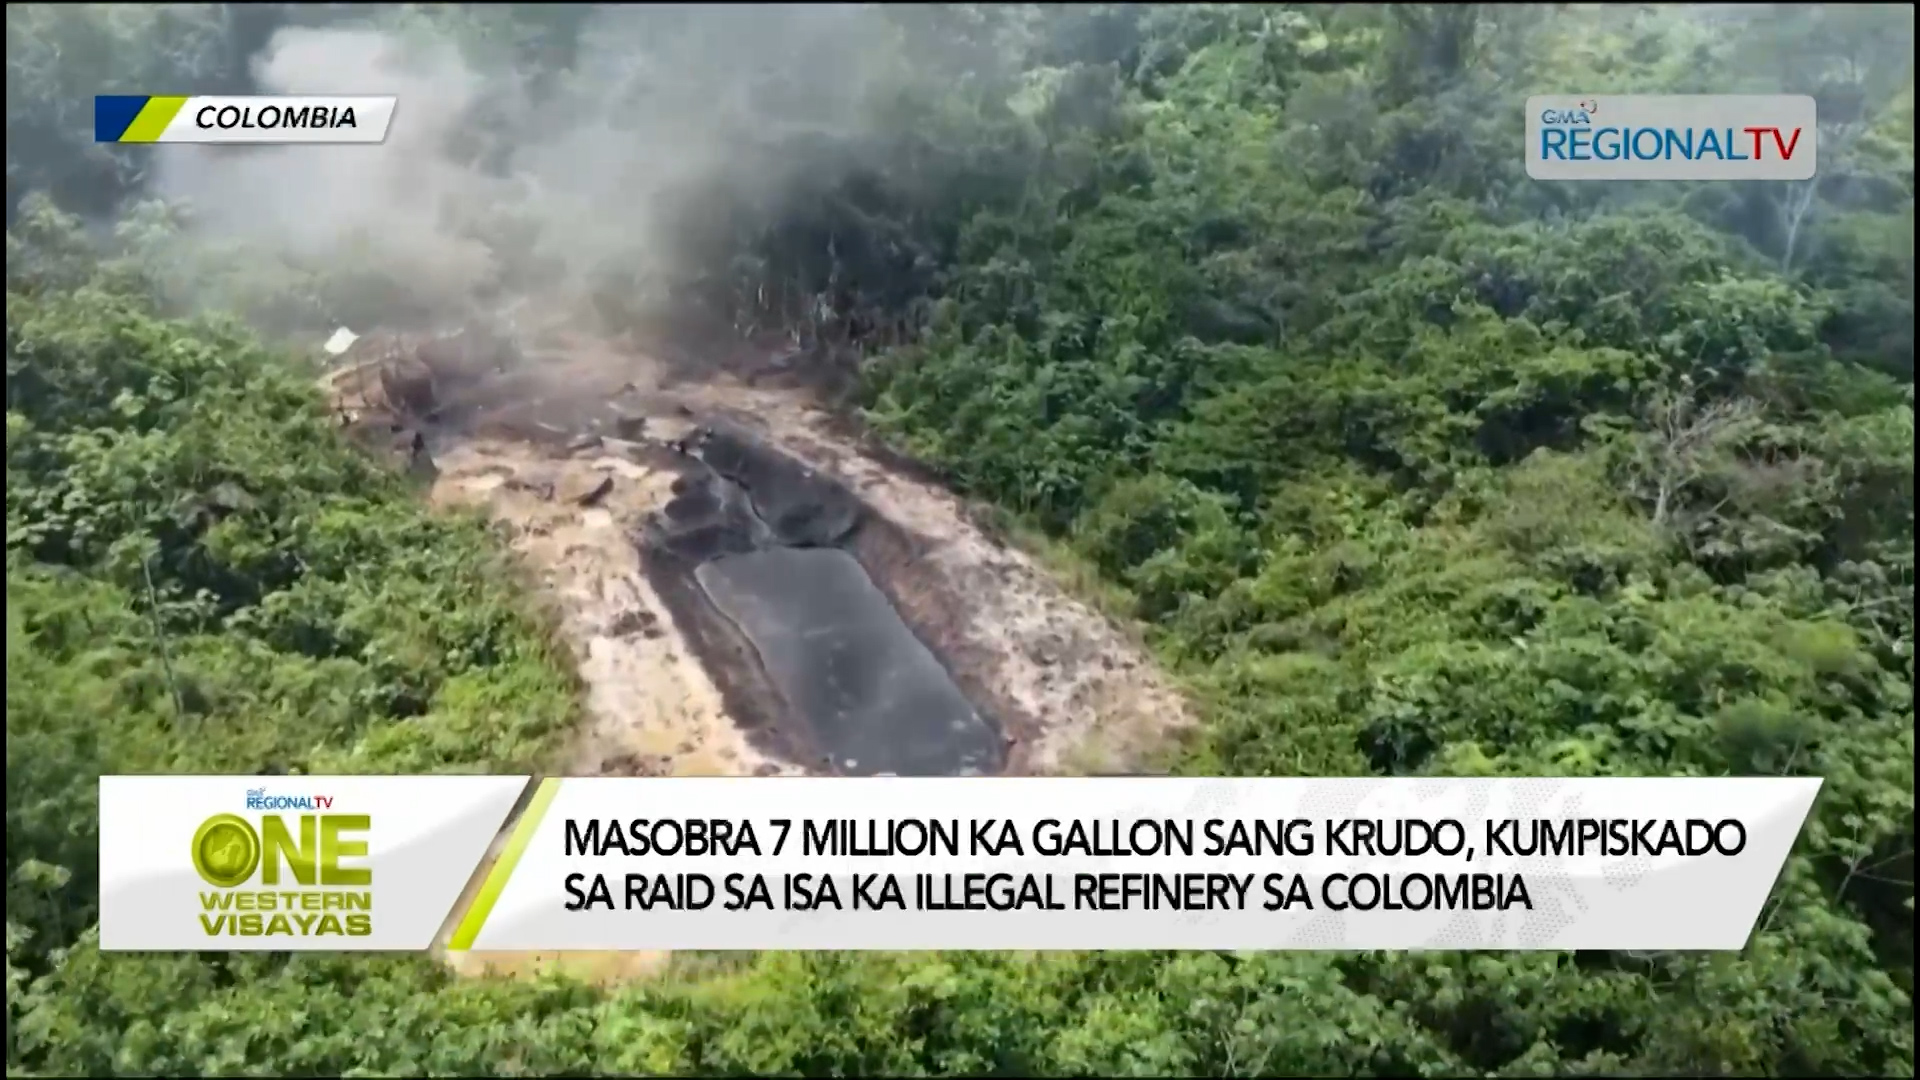 Masobra 7 million gallon sang krudo kumpiskado sa illegal refinery sa Colombia